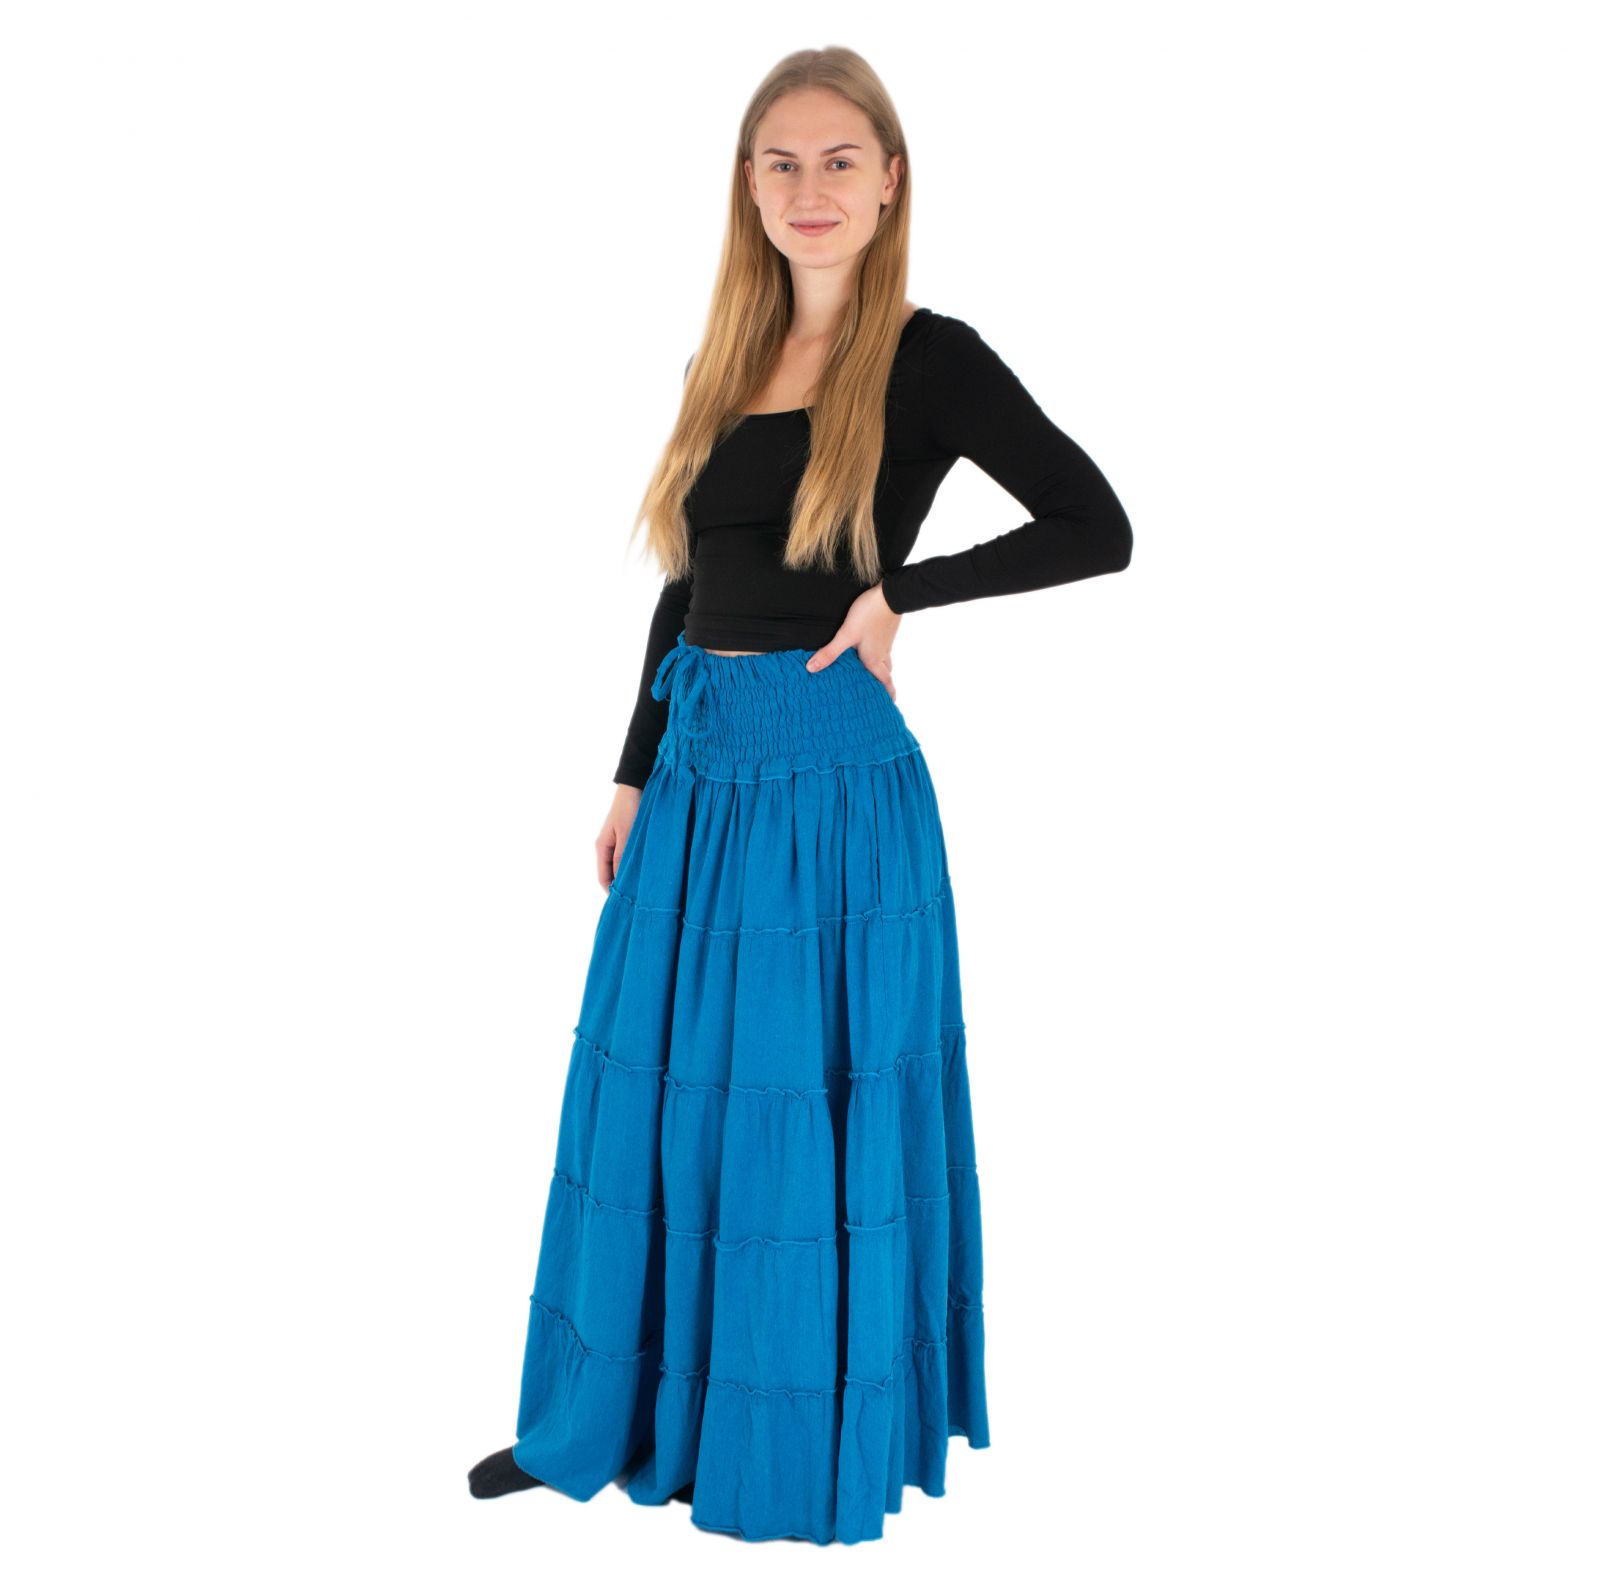 Dlhá modrá etno / hippie sukňa Bhintuna Cobalt Blue Nepal